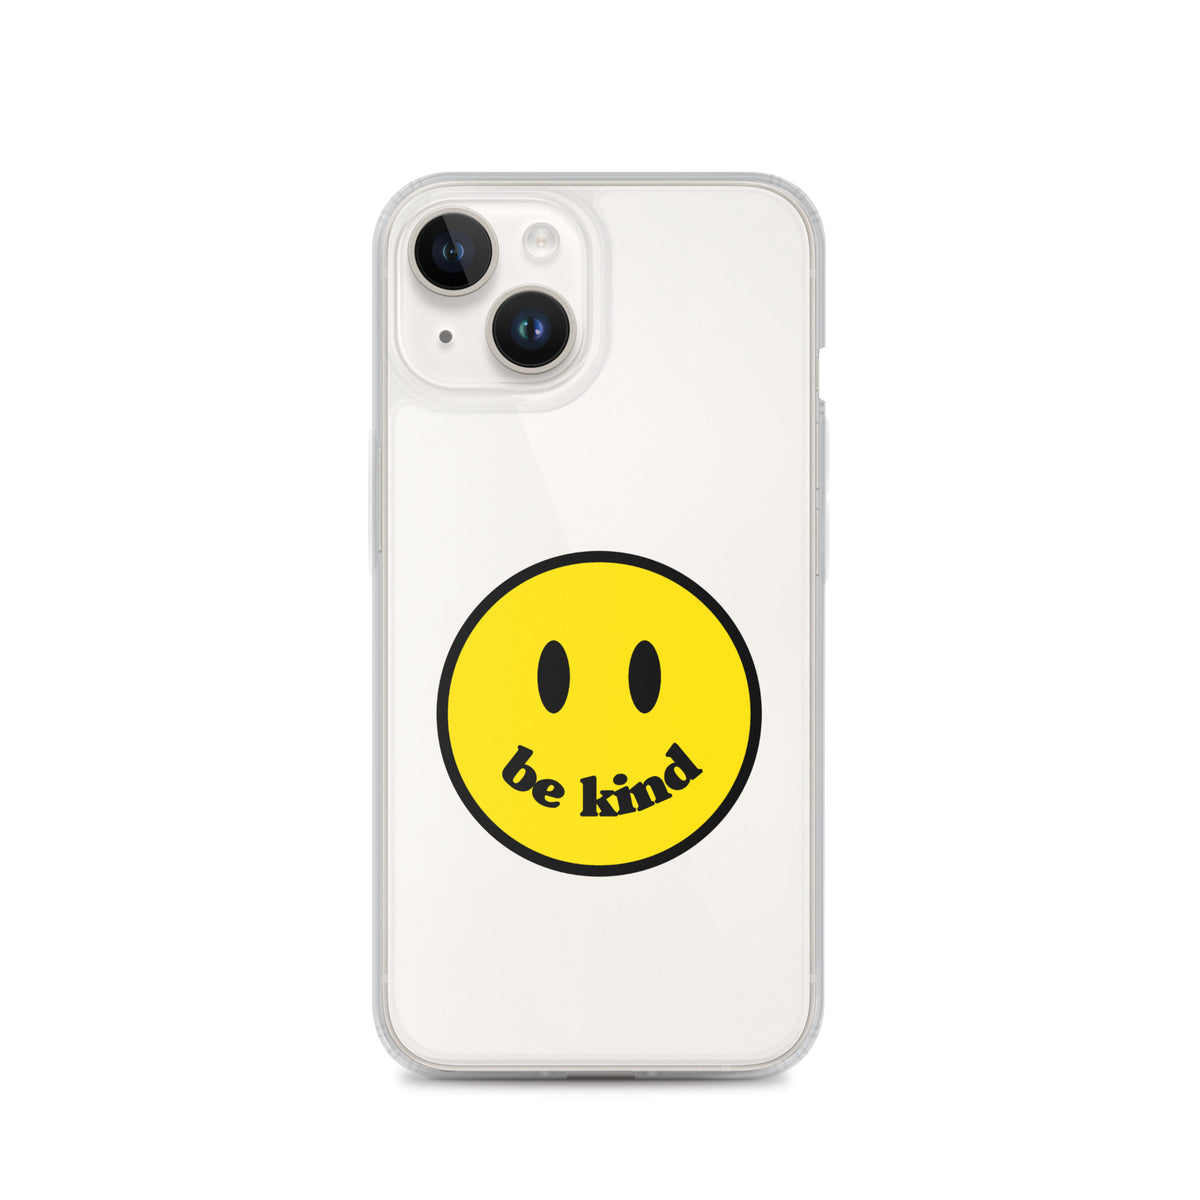 Highland Be Kind Smile iPhone Case